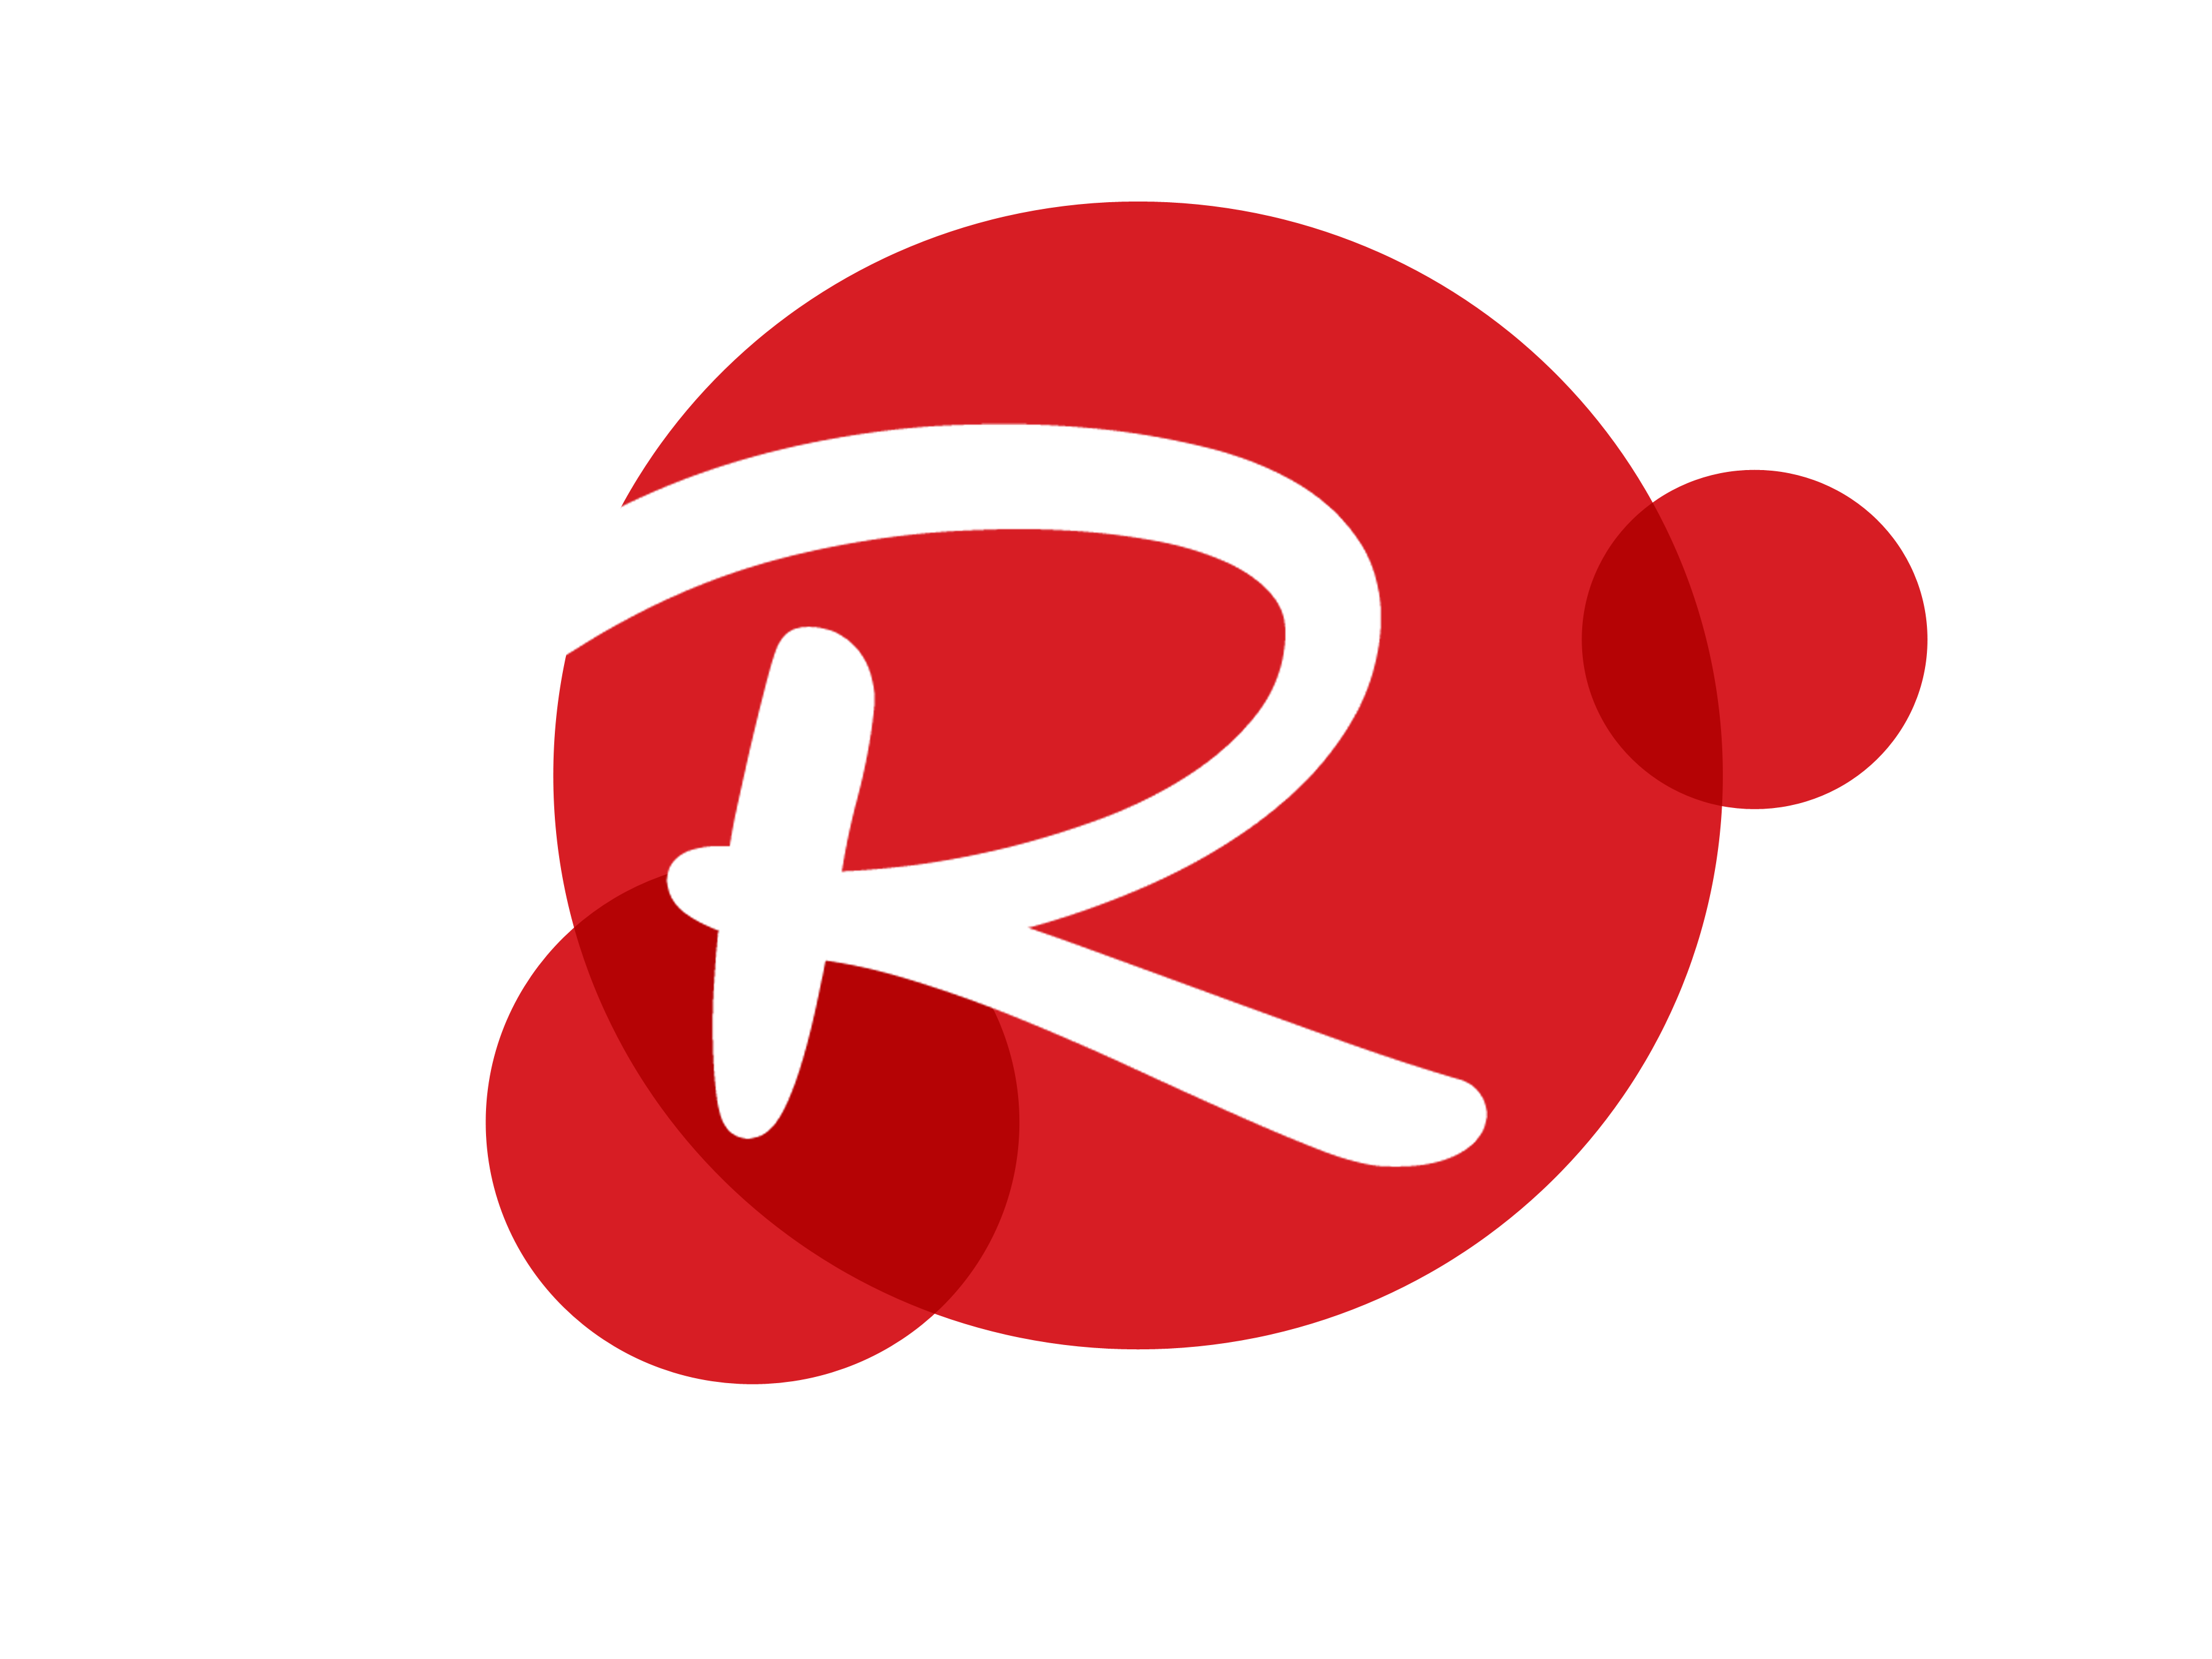 r logo | Logospike.com: Famous and Free Vector Logos